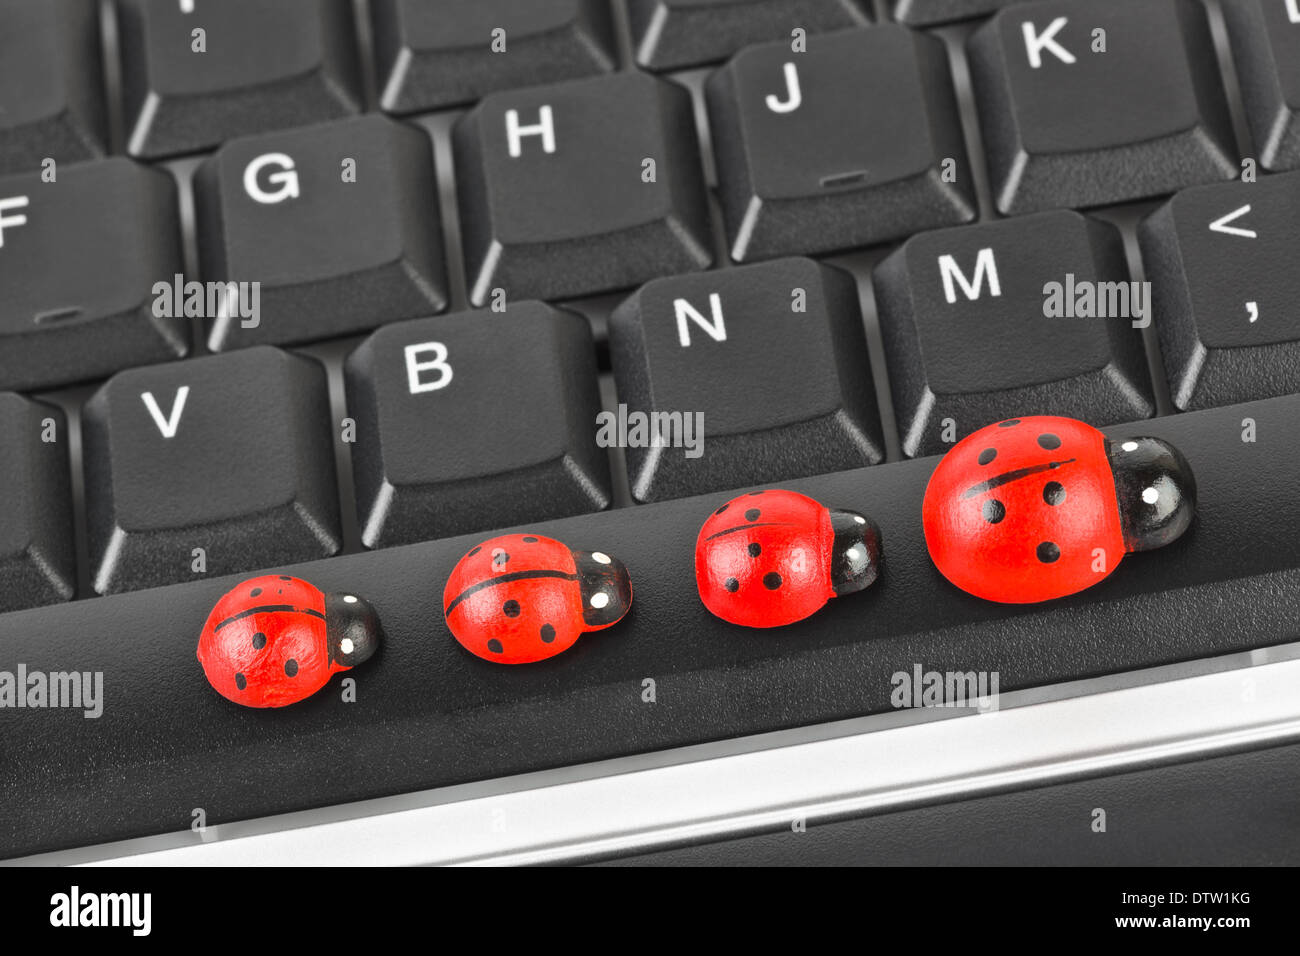 Toy ladybirds on computer keyboard Stock Photo